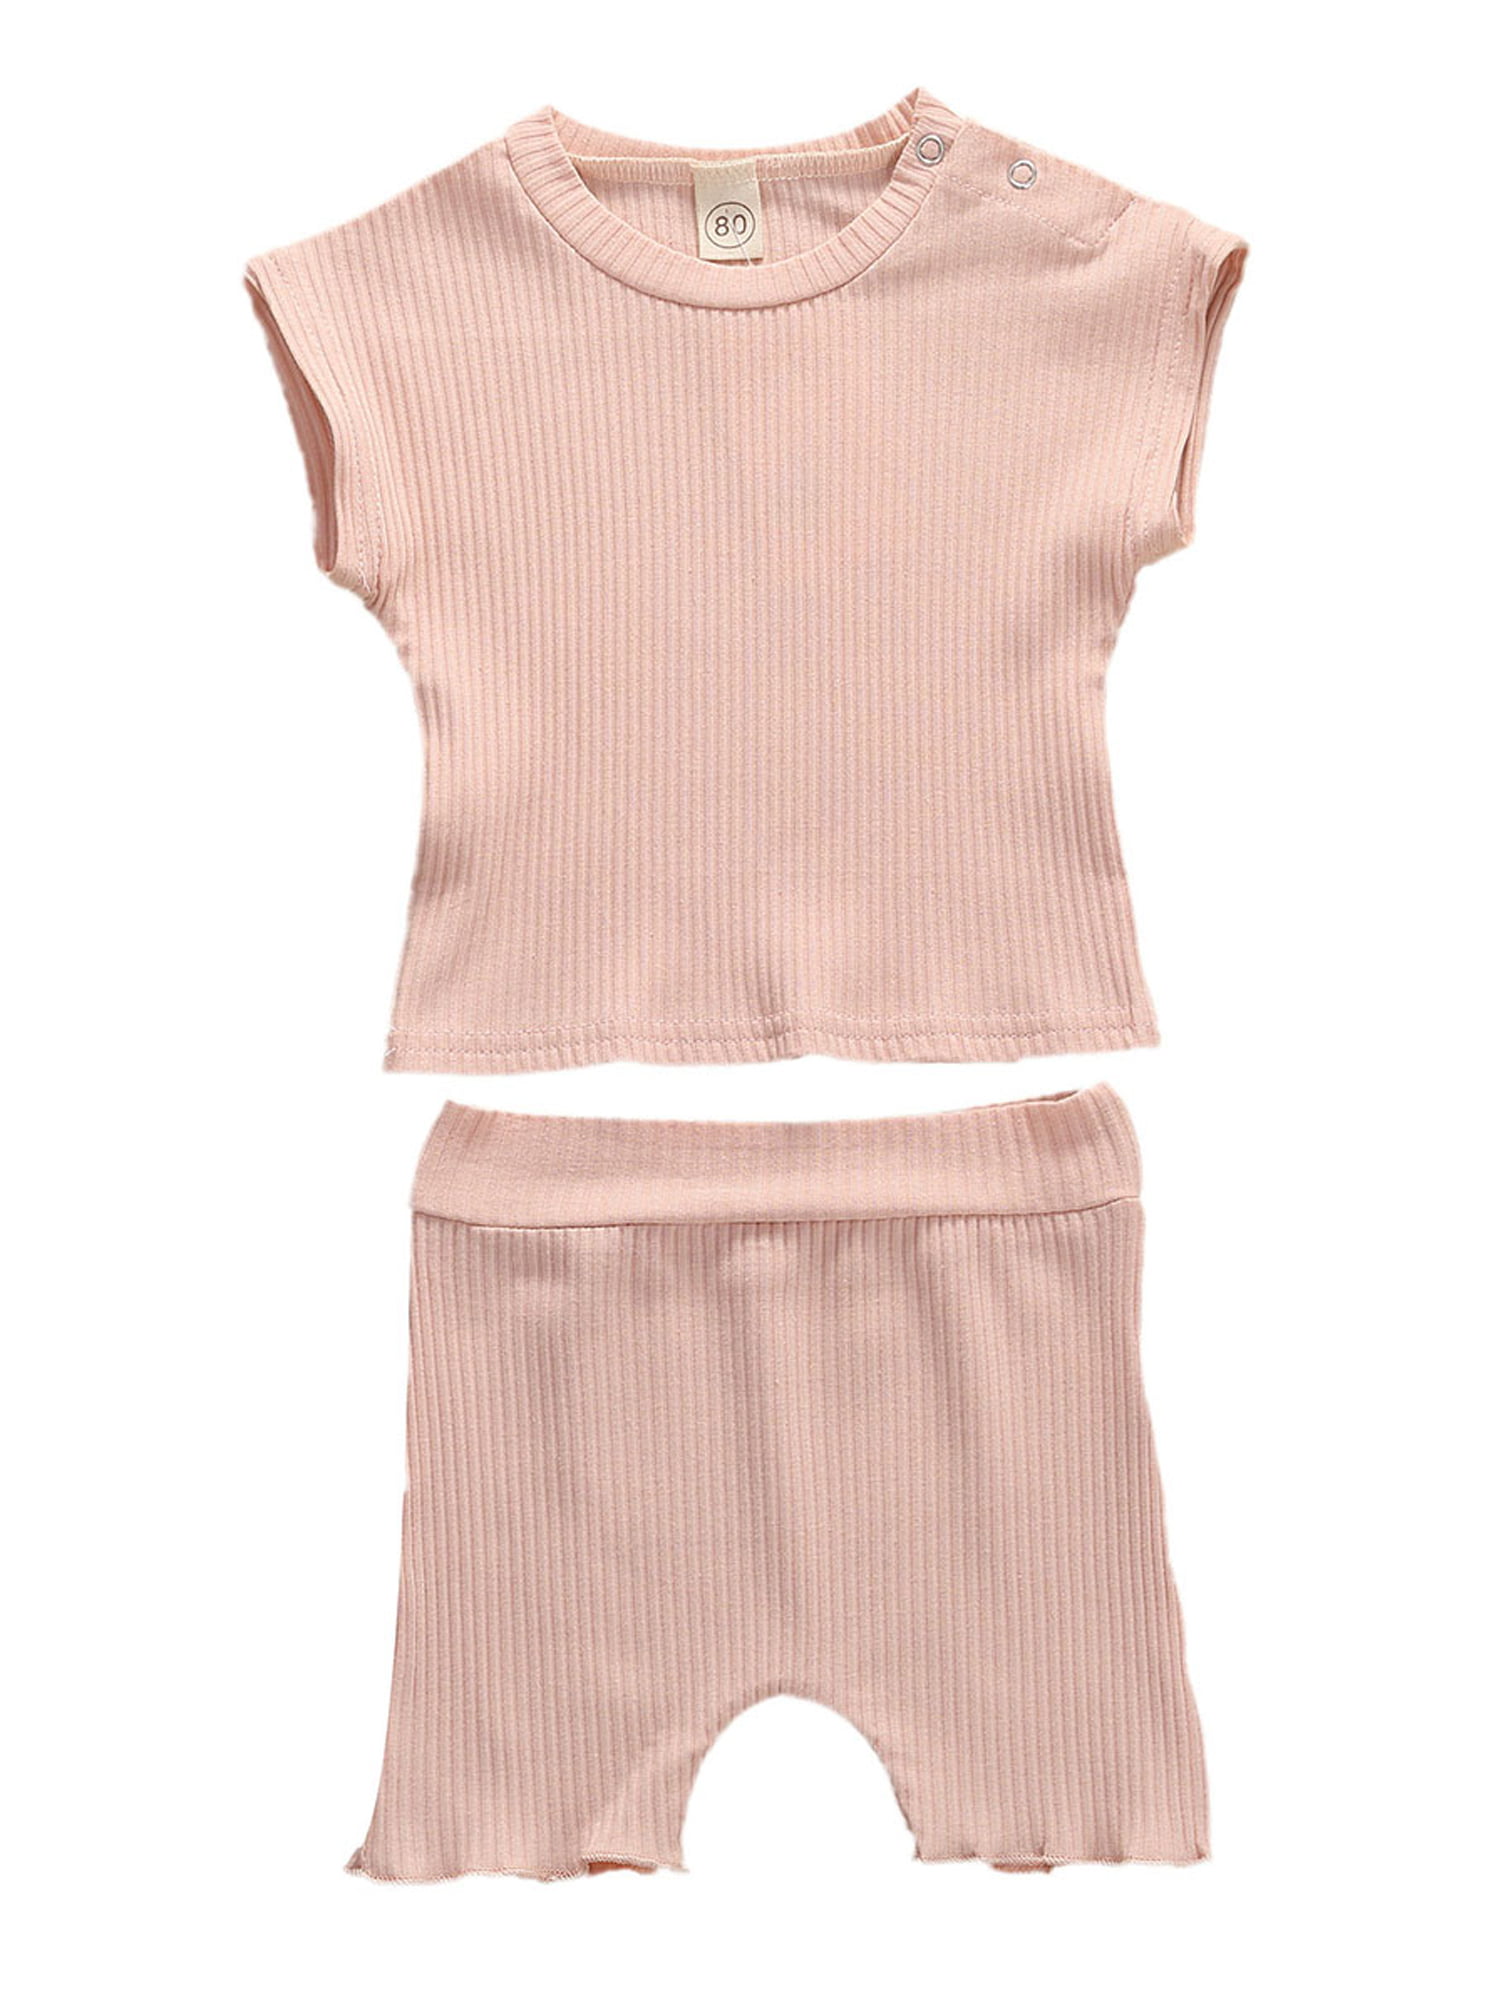 crop top dress for baby girl